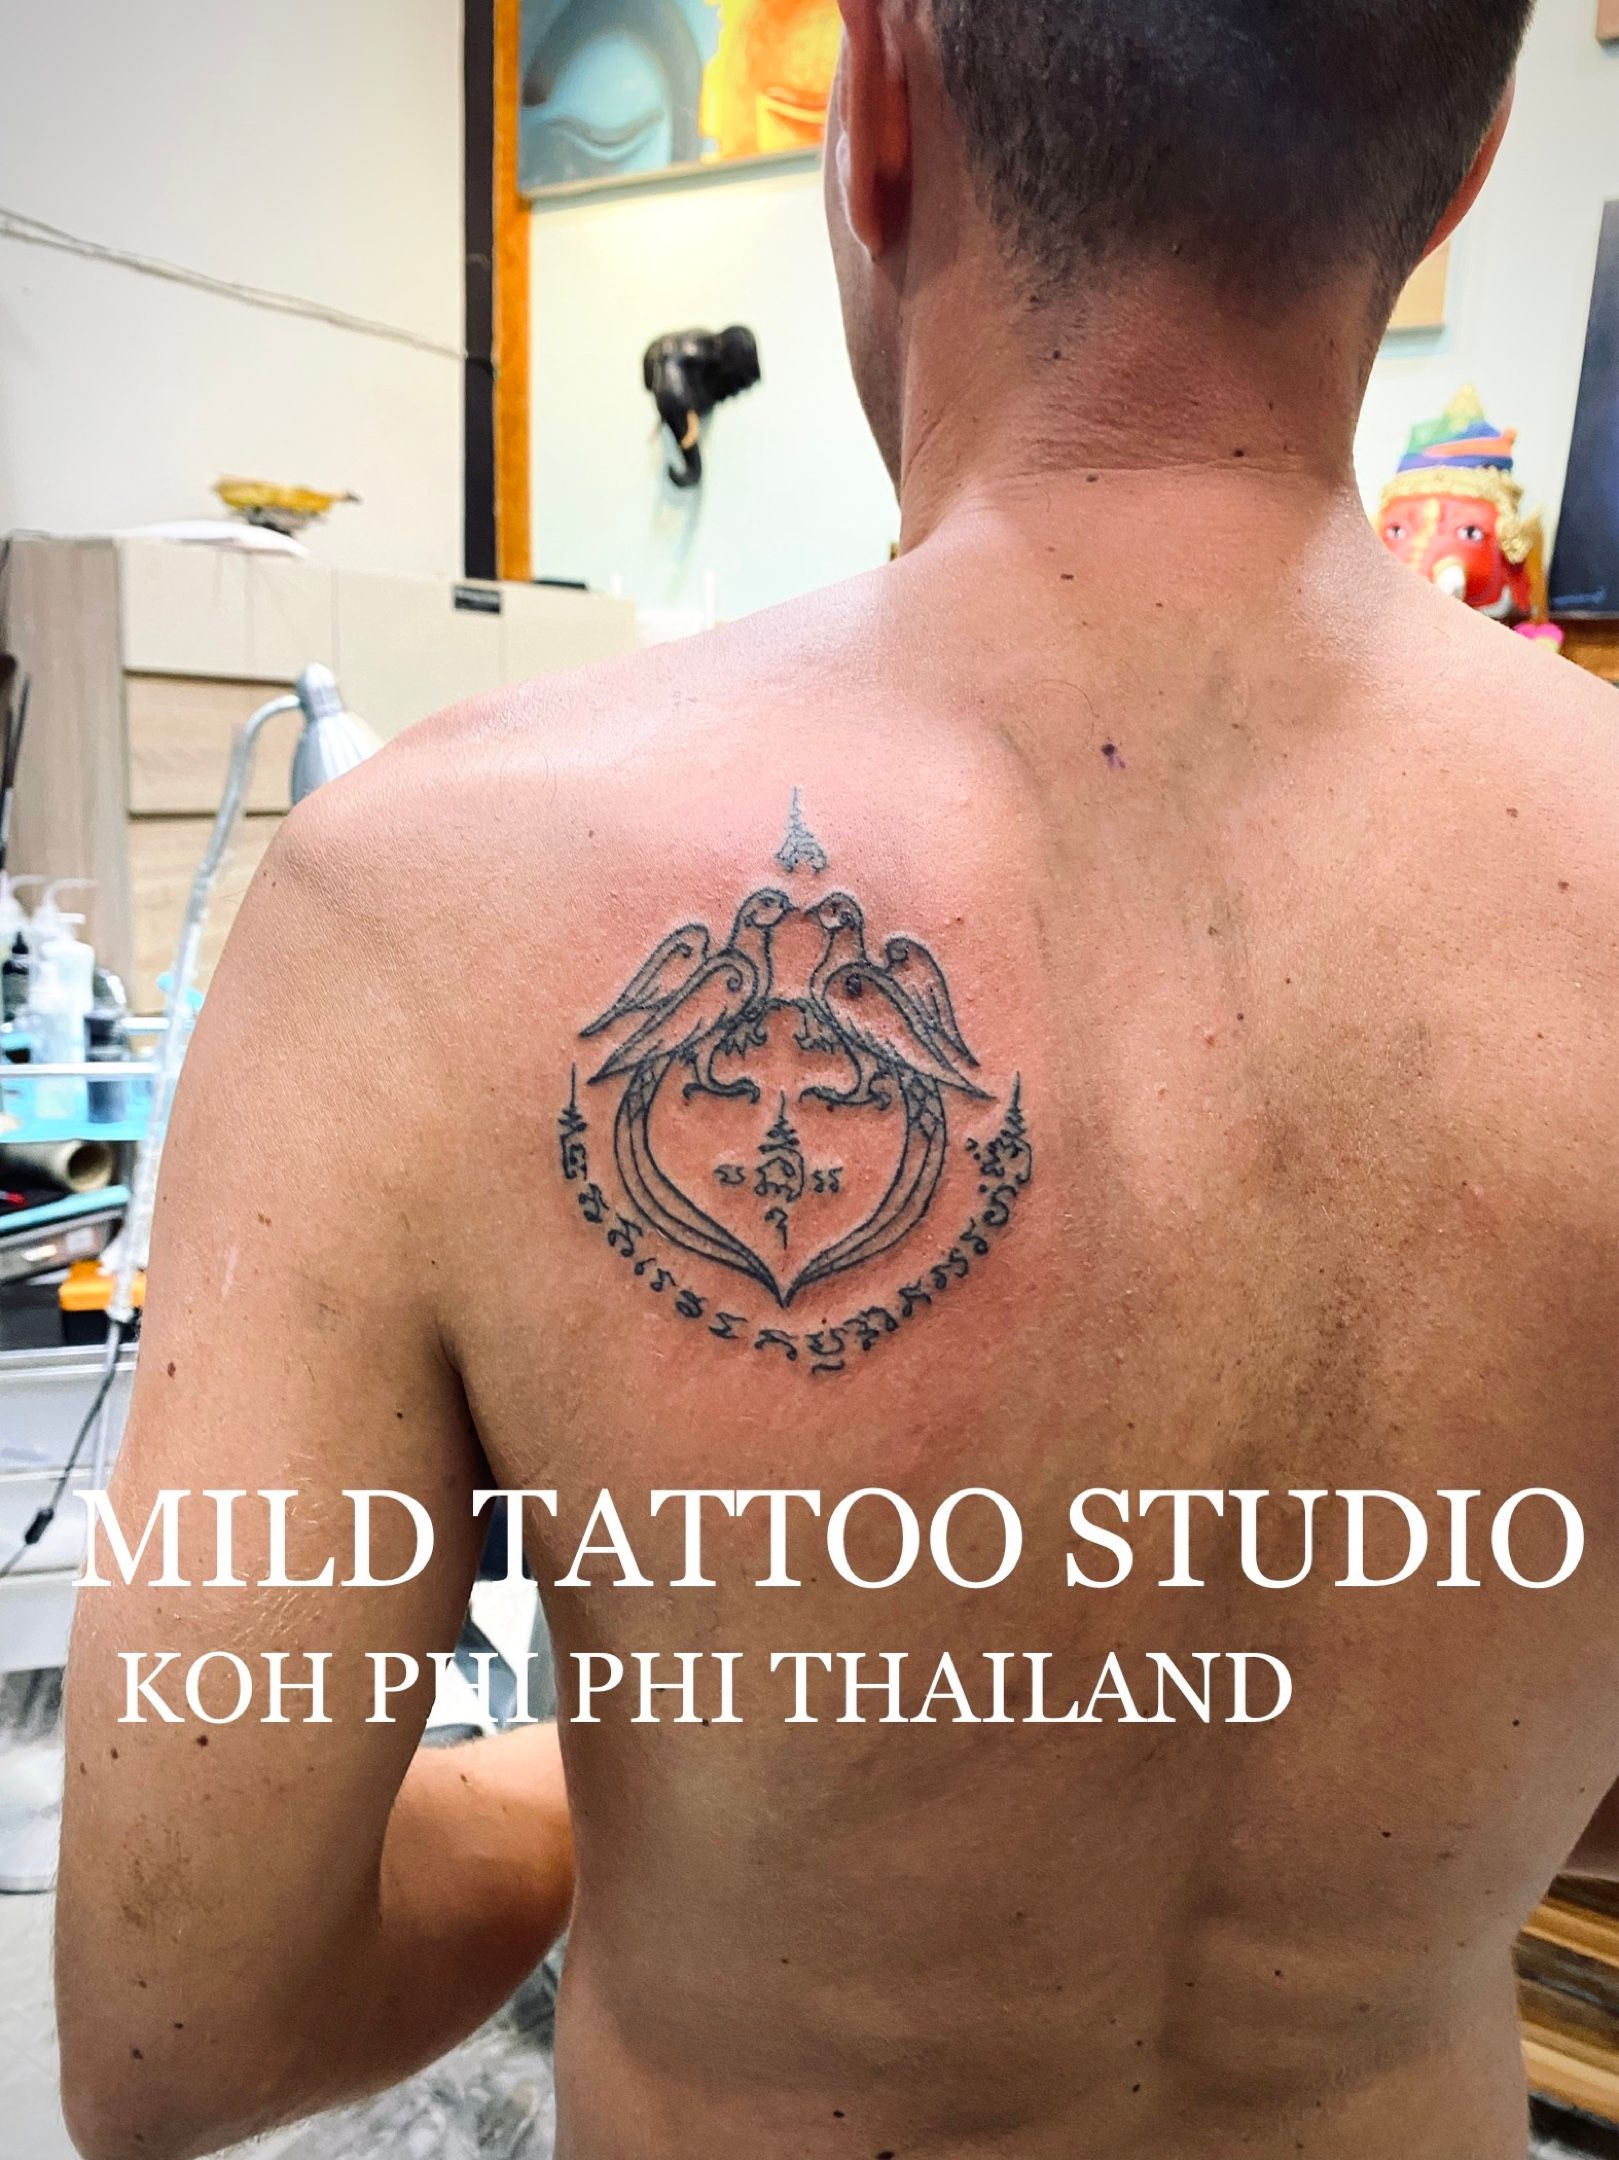 MILD TATTOO PHI PHI STUDIO BAMBOO TATTOO THAILAND on X: 